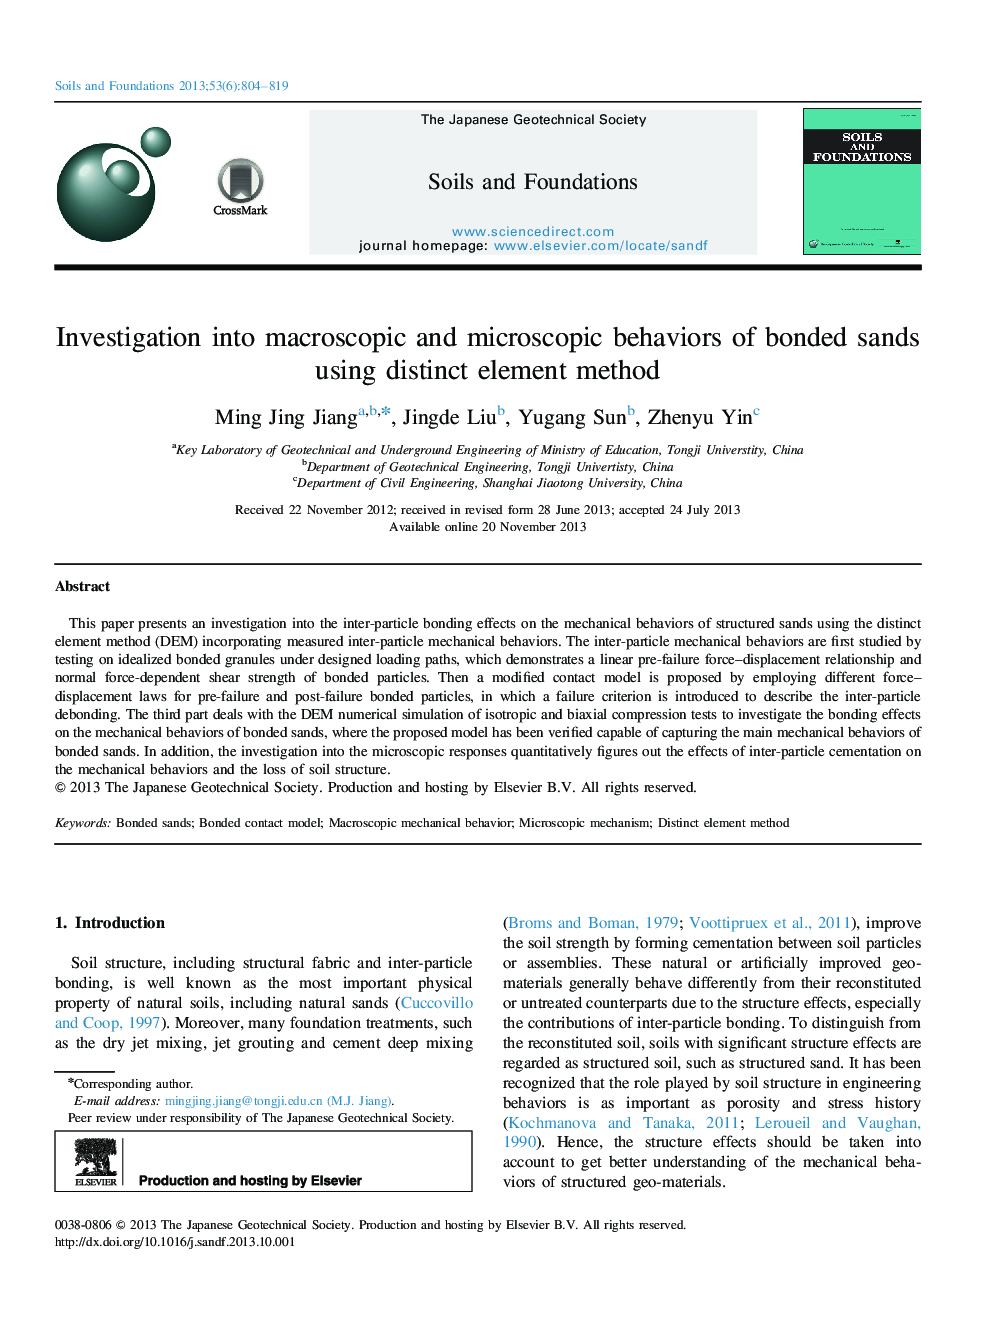 Investigation into macroscopic and microscopic behaviors of bonded sands using distinct element method 